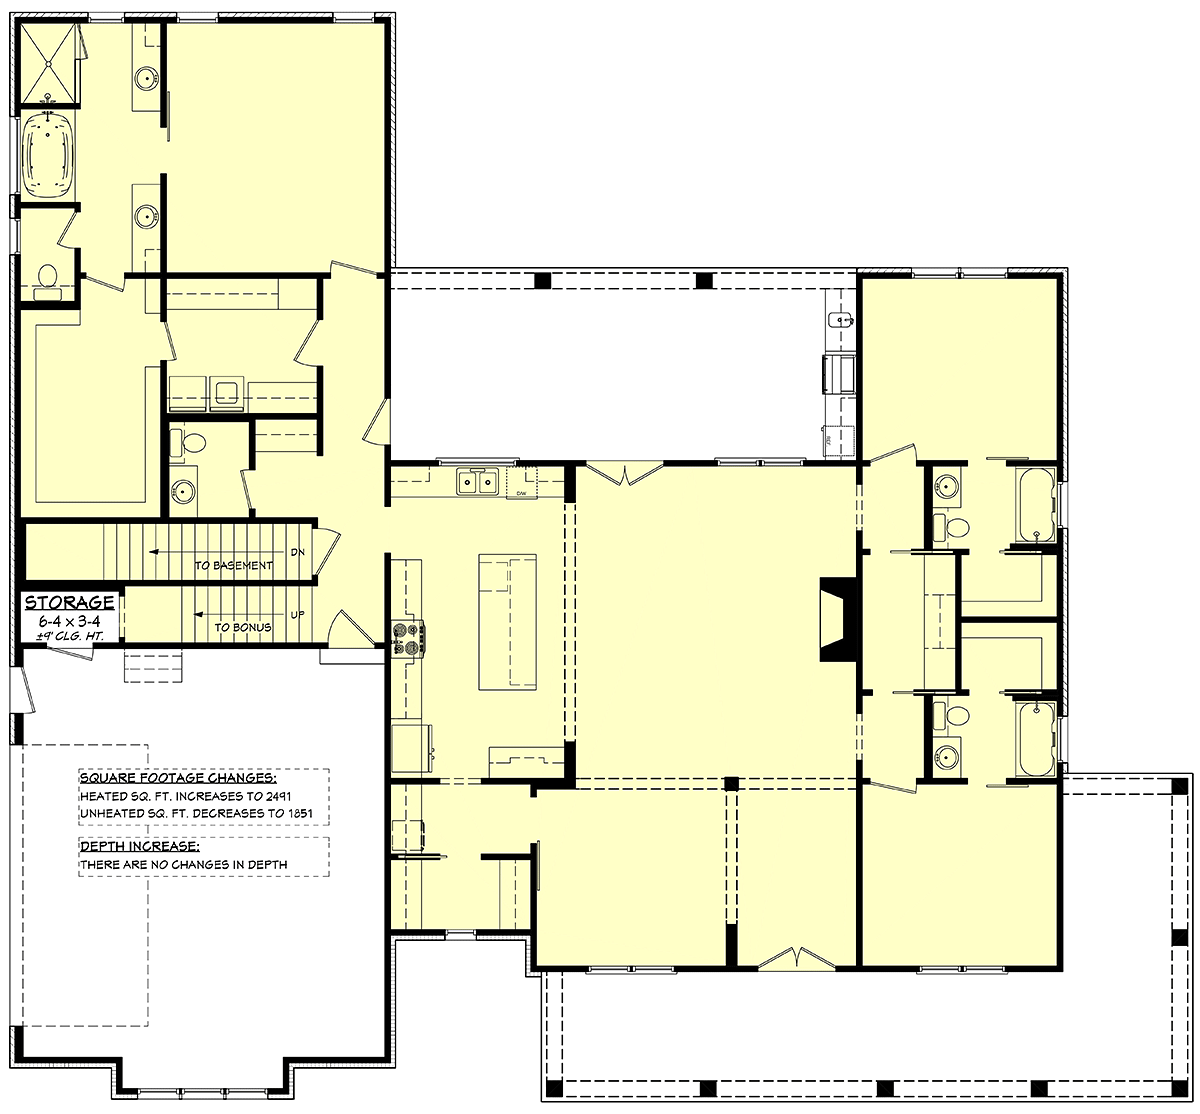 House Plan 80881 Alternate Level One